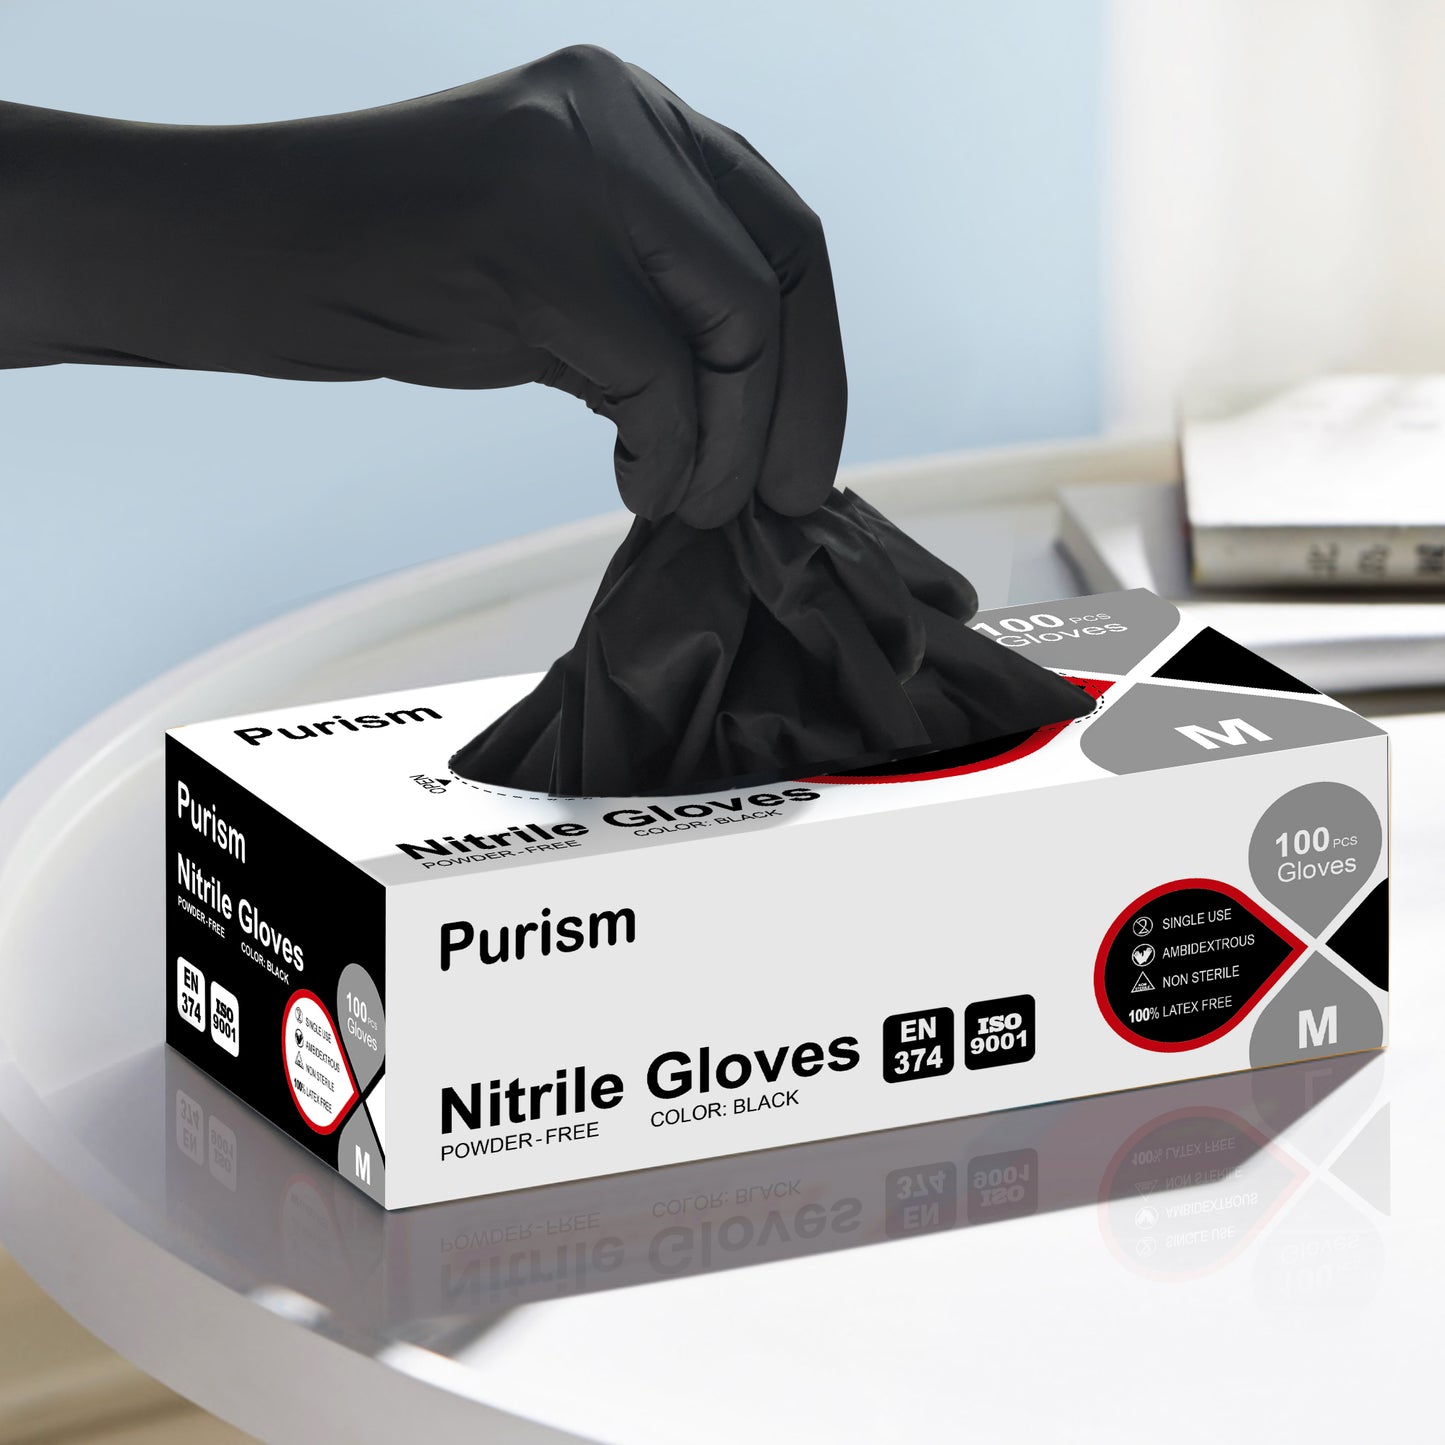 Purism Black Nitrile Gloves, 4mil Size S/M/L/XL, 100 pcs/box,1000pcs/carton, Powder-free, Latex free, Free shipping to US